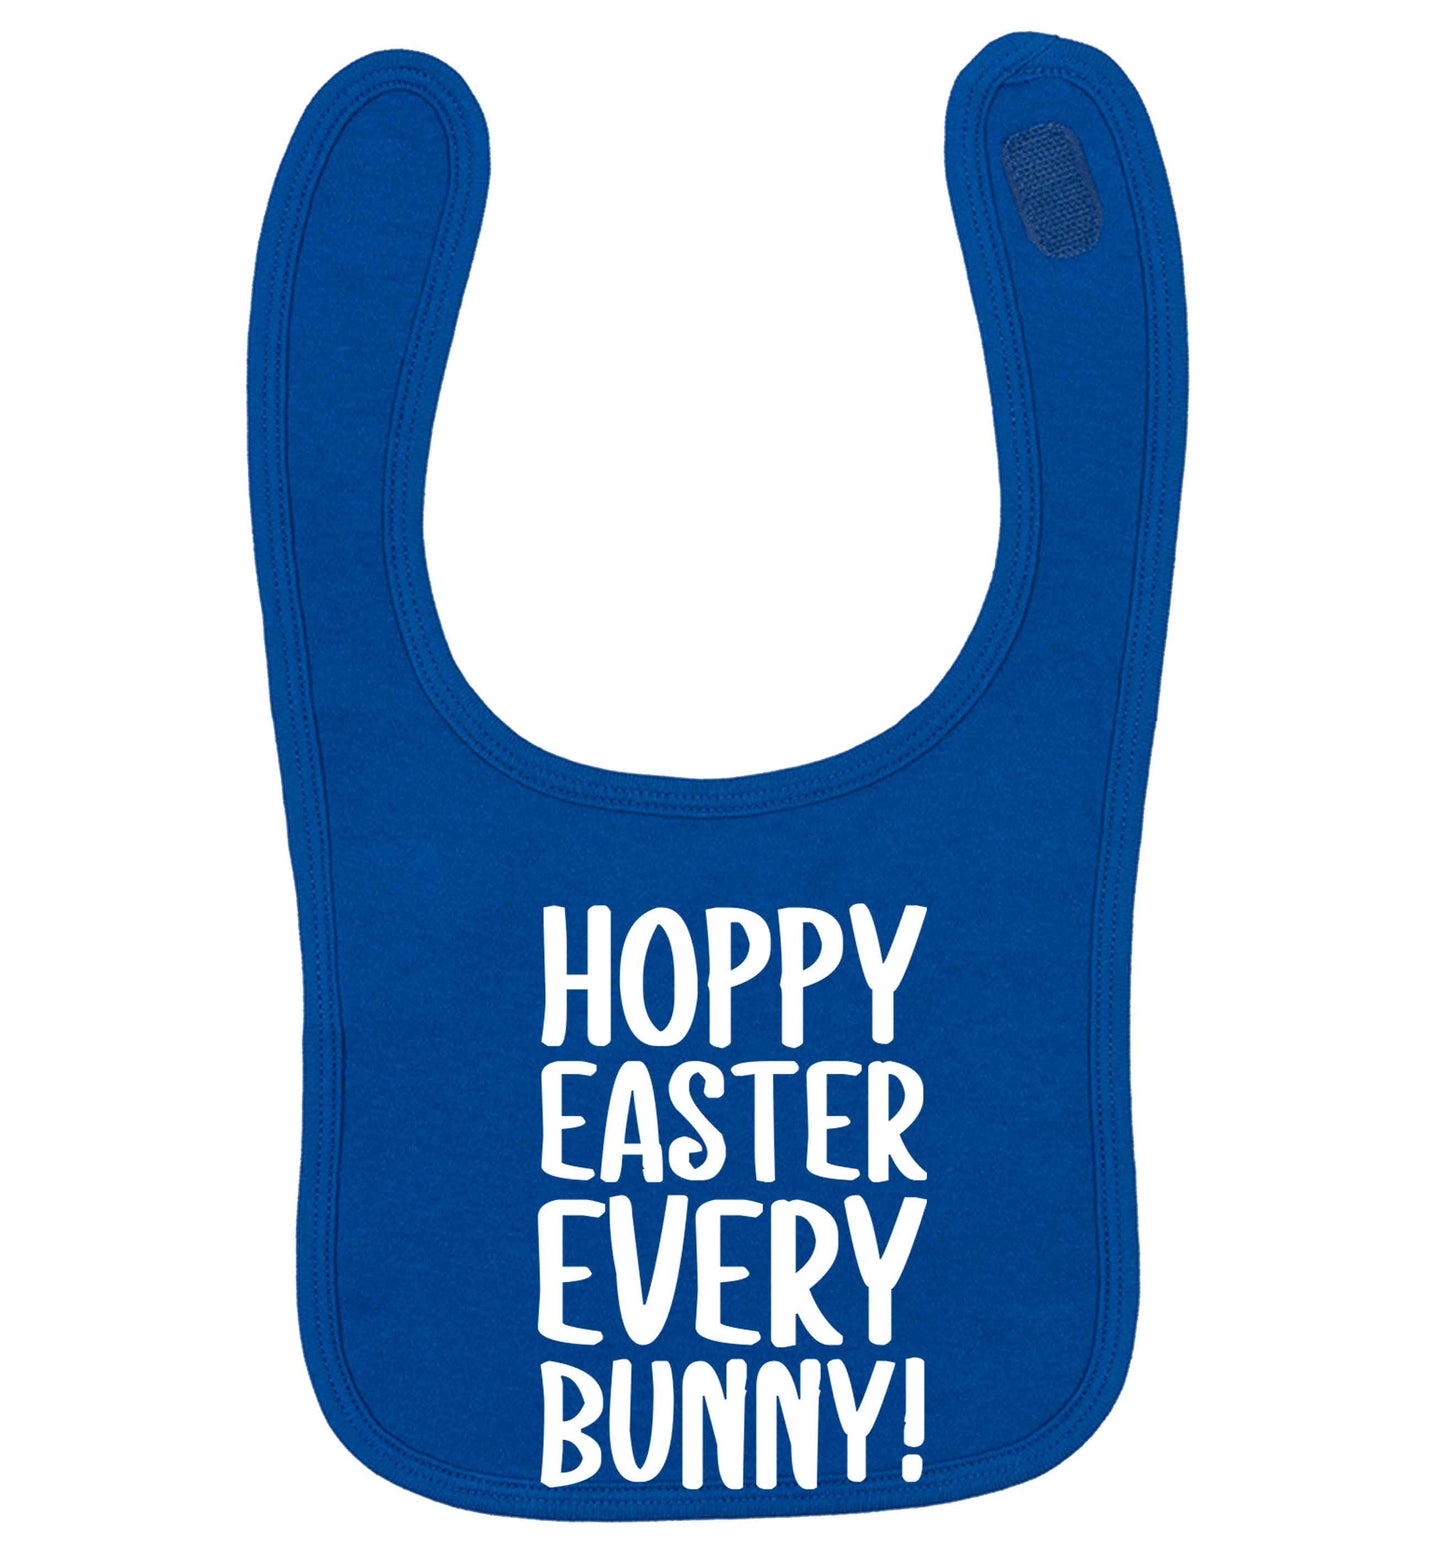 Hoppy Easter every bunny! royal blue baby bib